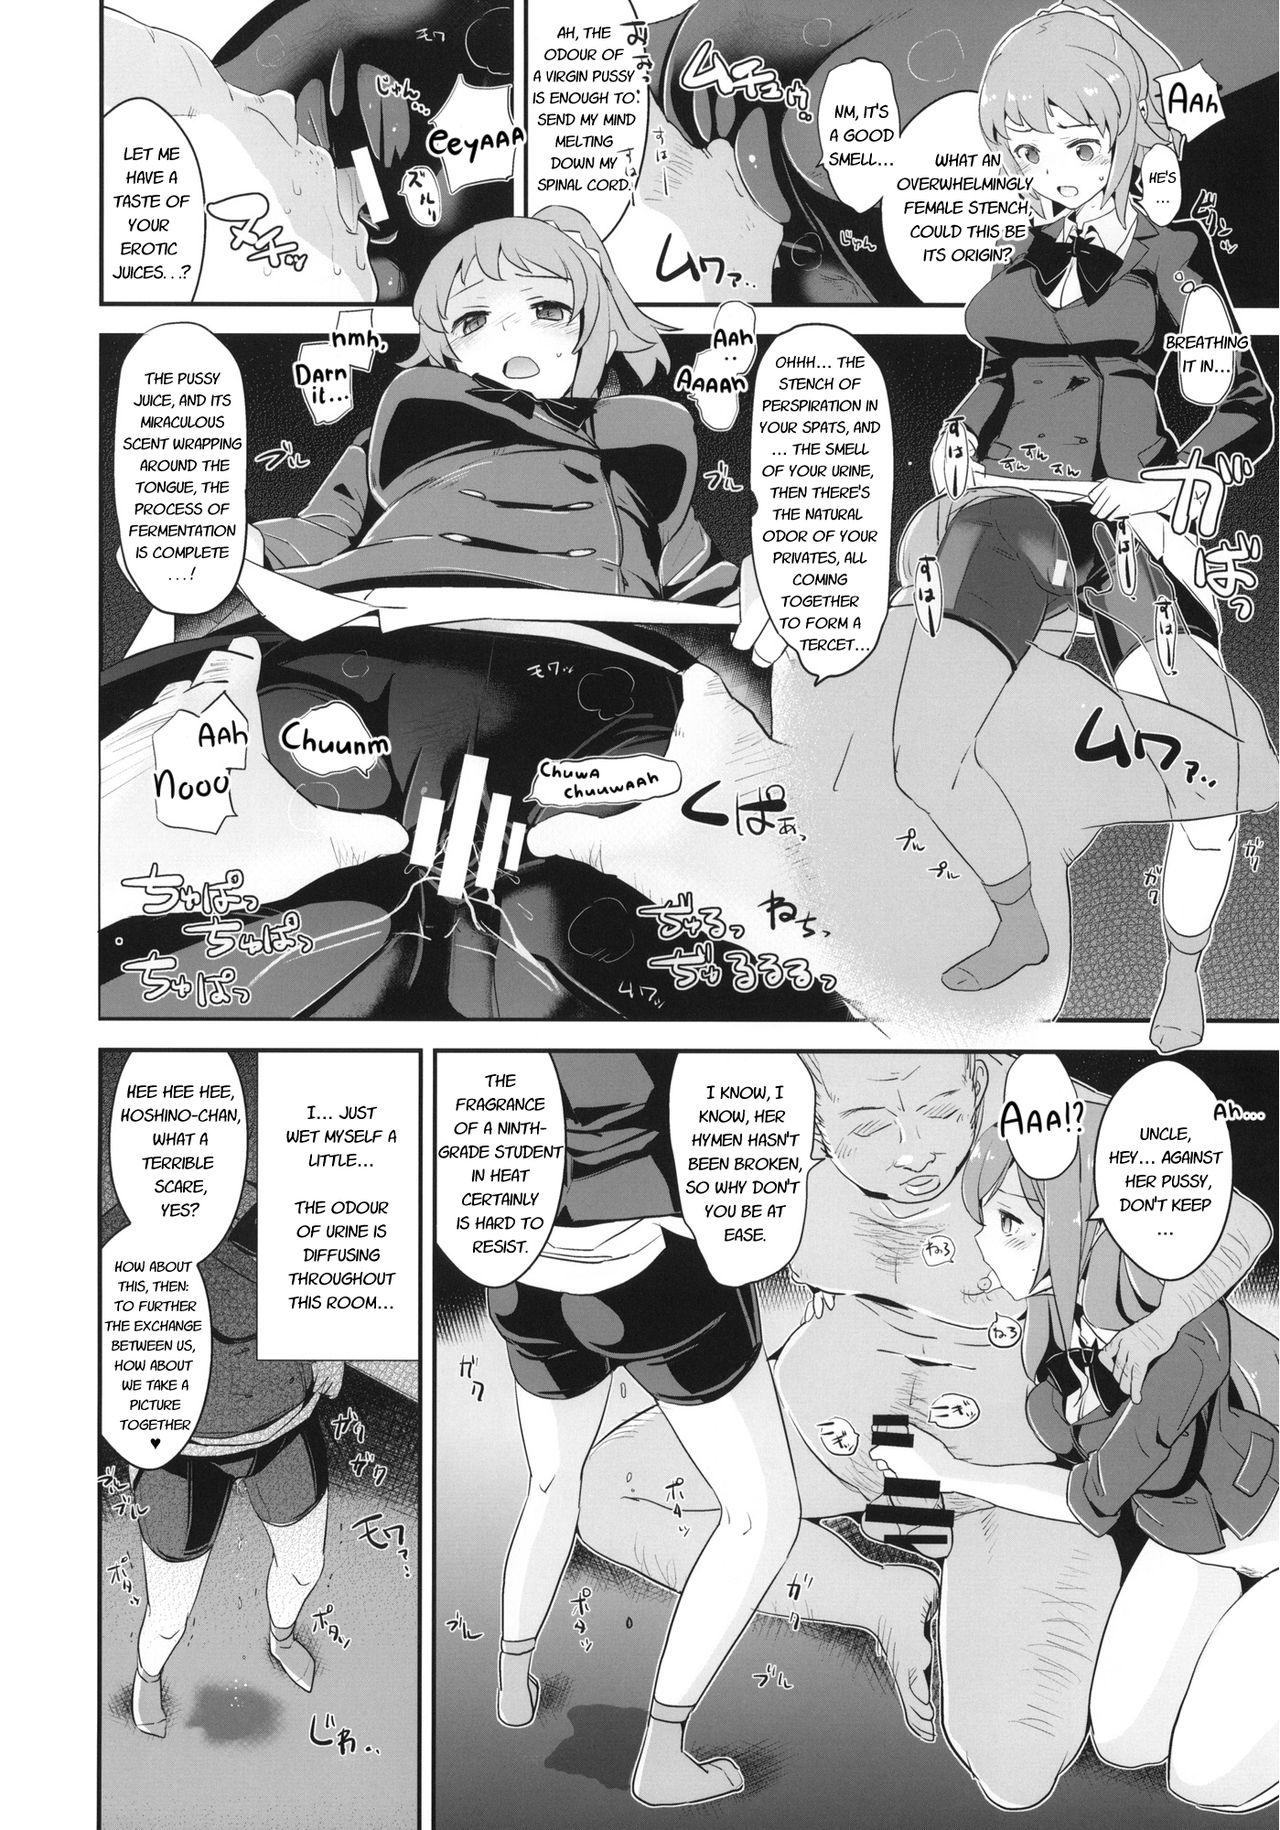 Ladyboy Omanko Damedesu. - Gundam build fighters try Nudes - Page 5